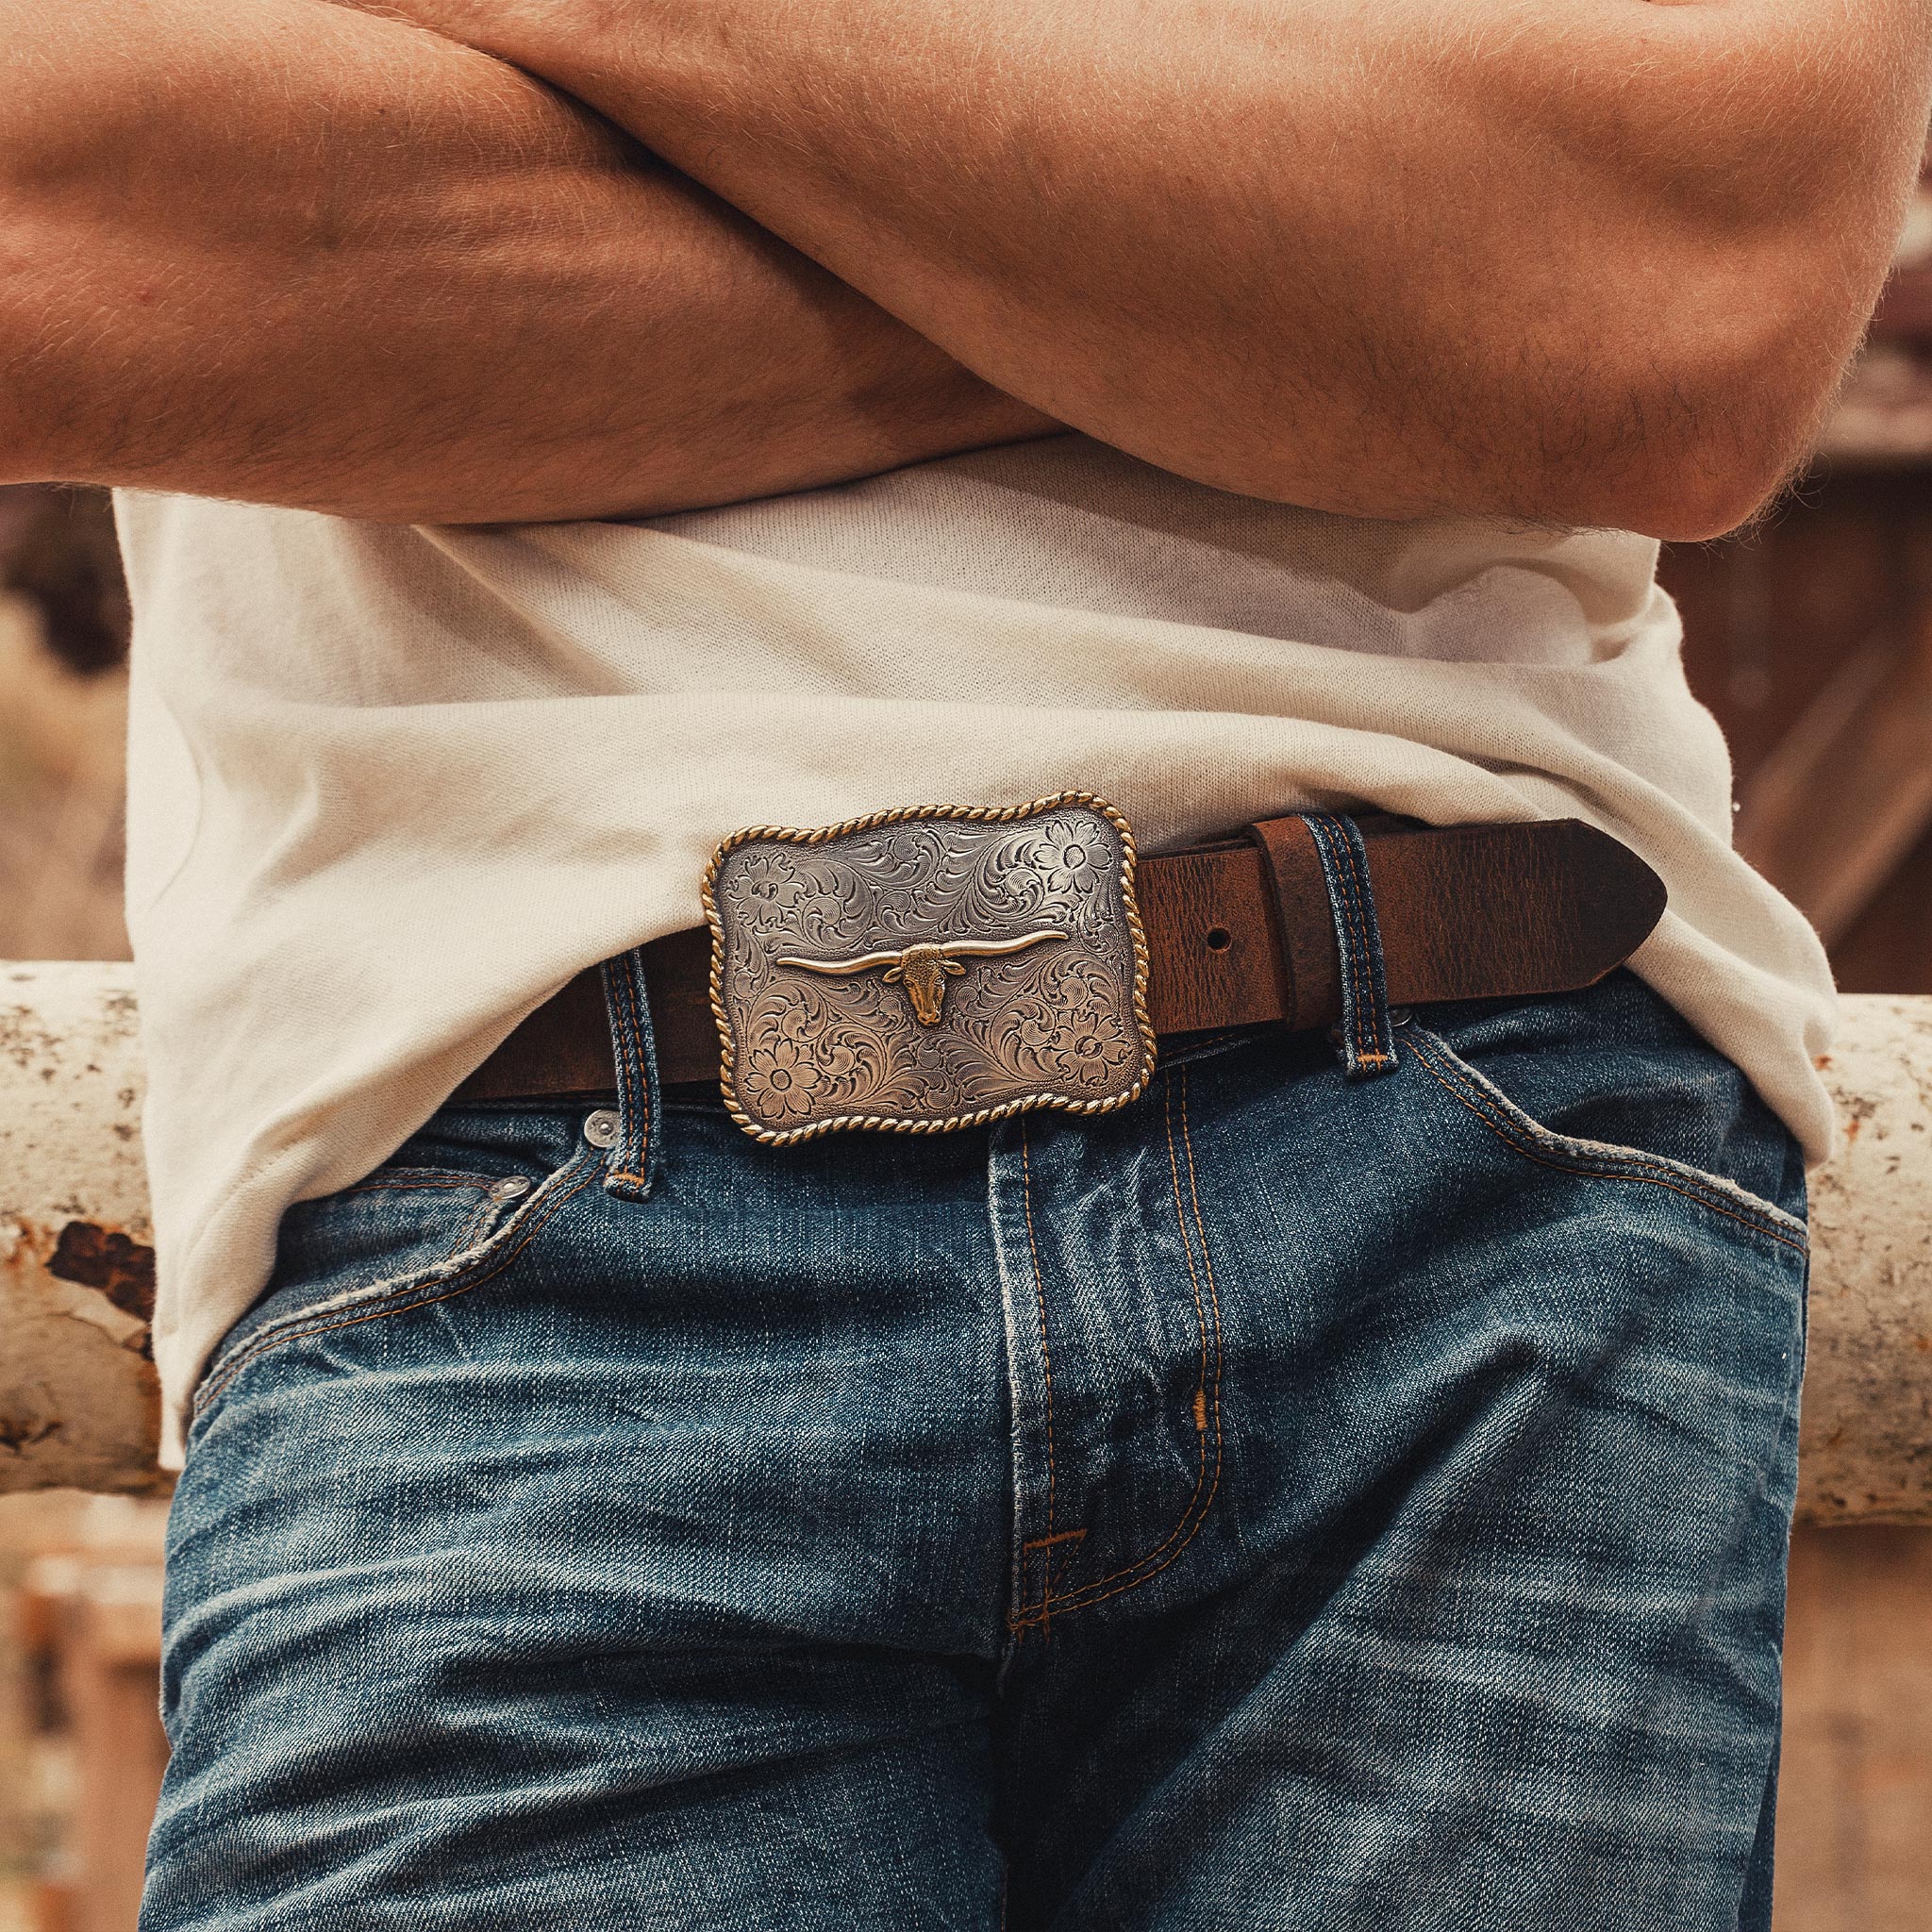 cowboy belt buckle